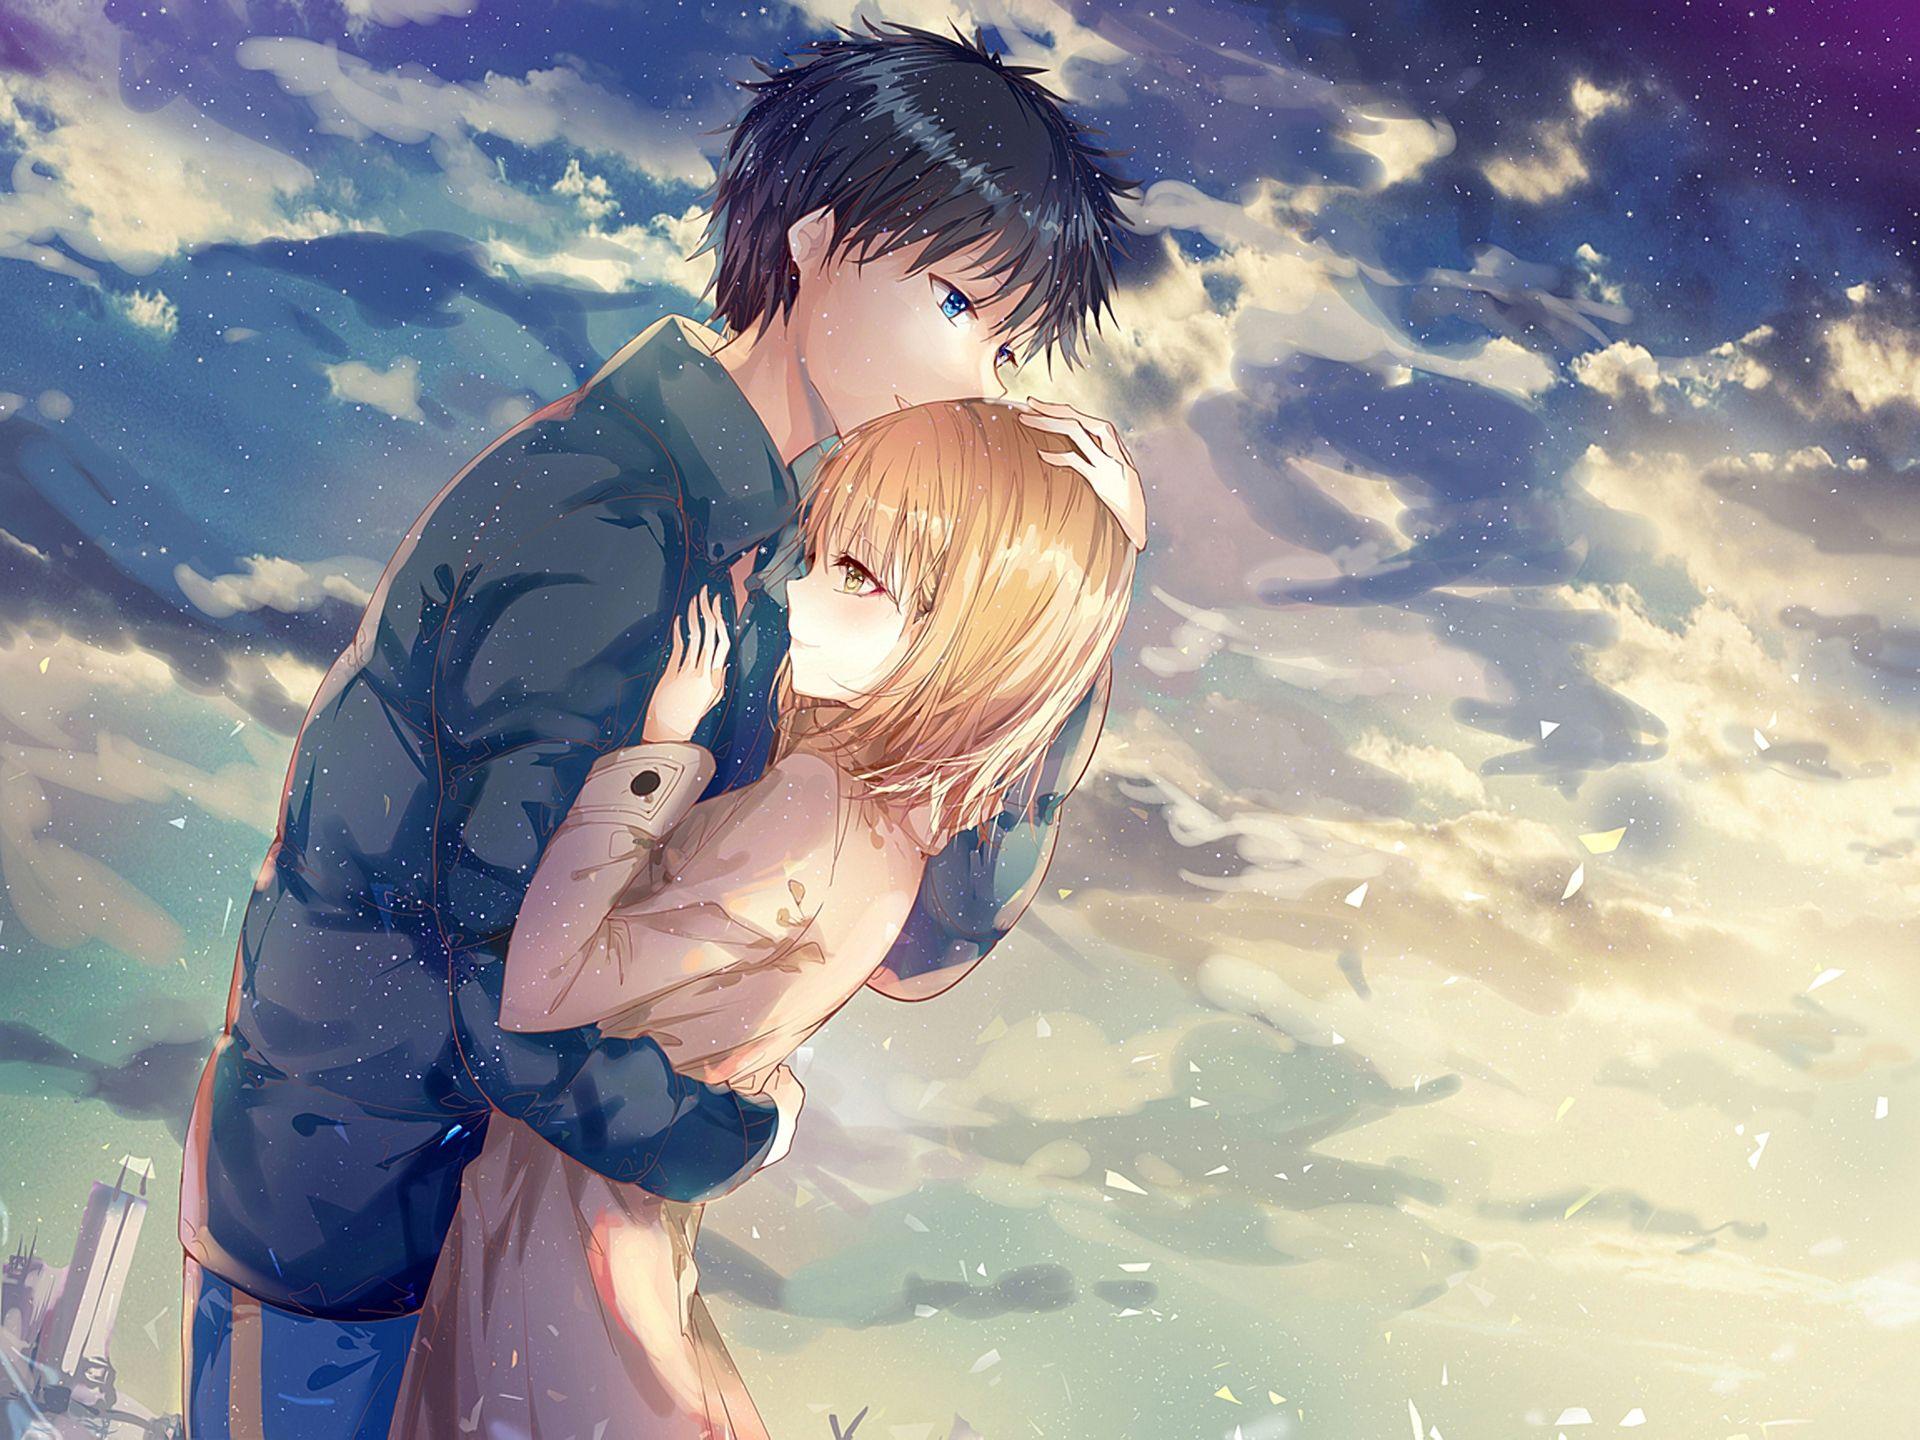 Wallpapers Anime Couple, Hug, Romance, Clouds, Scenic